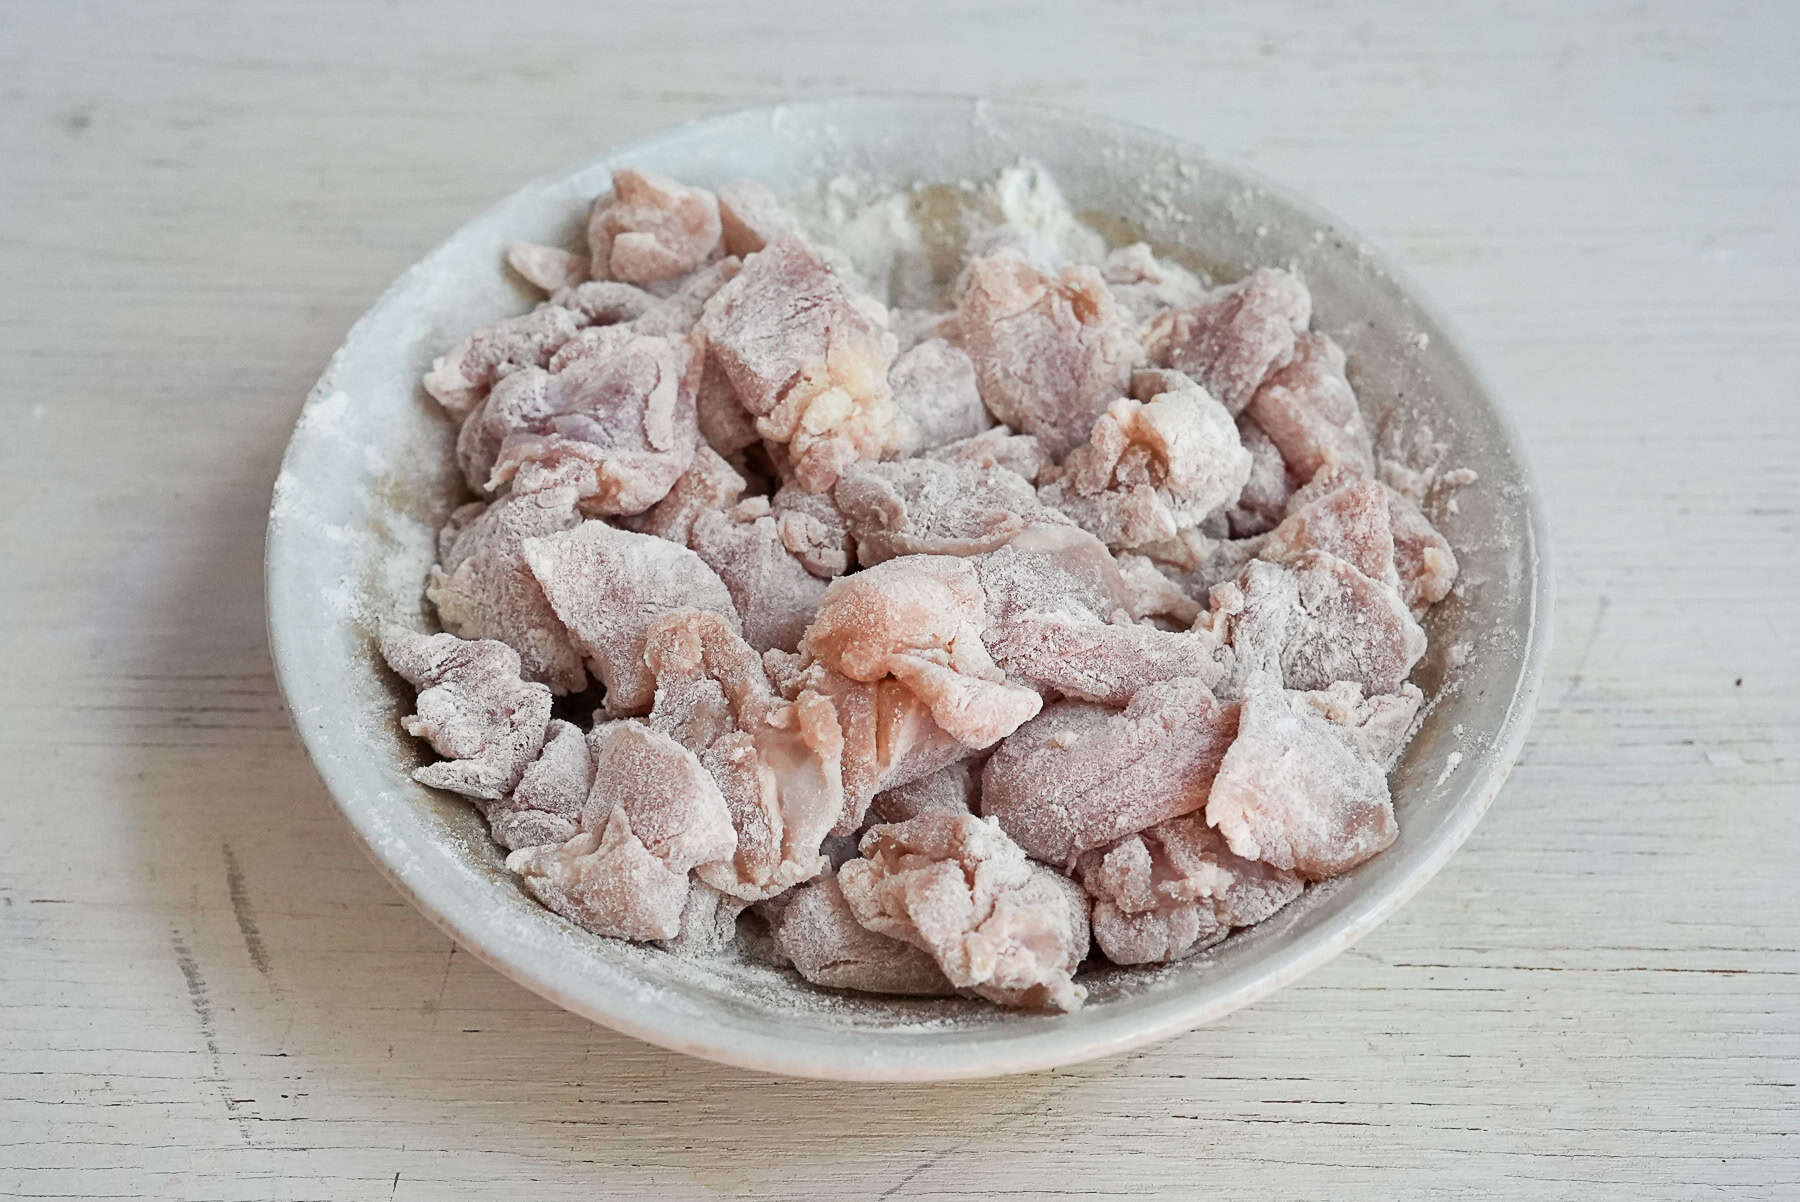 Coat the chicken with tempura flour